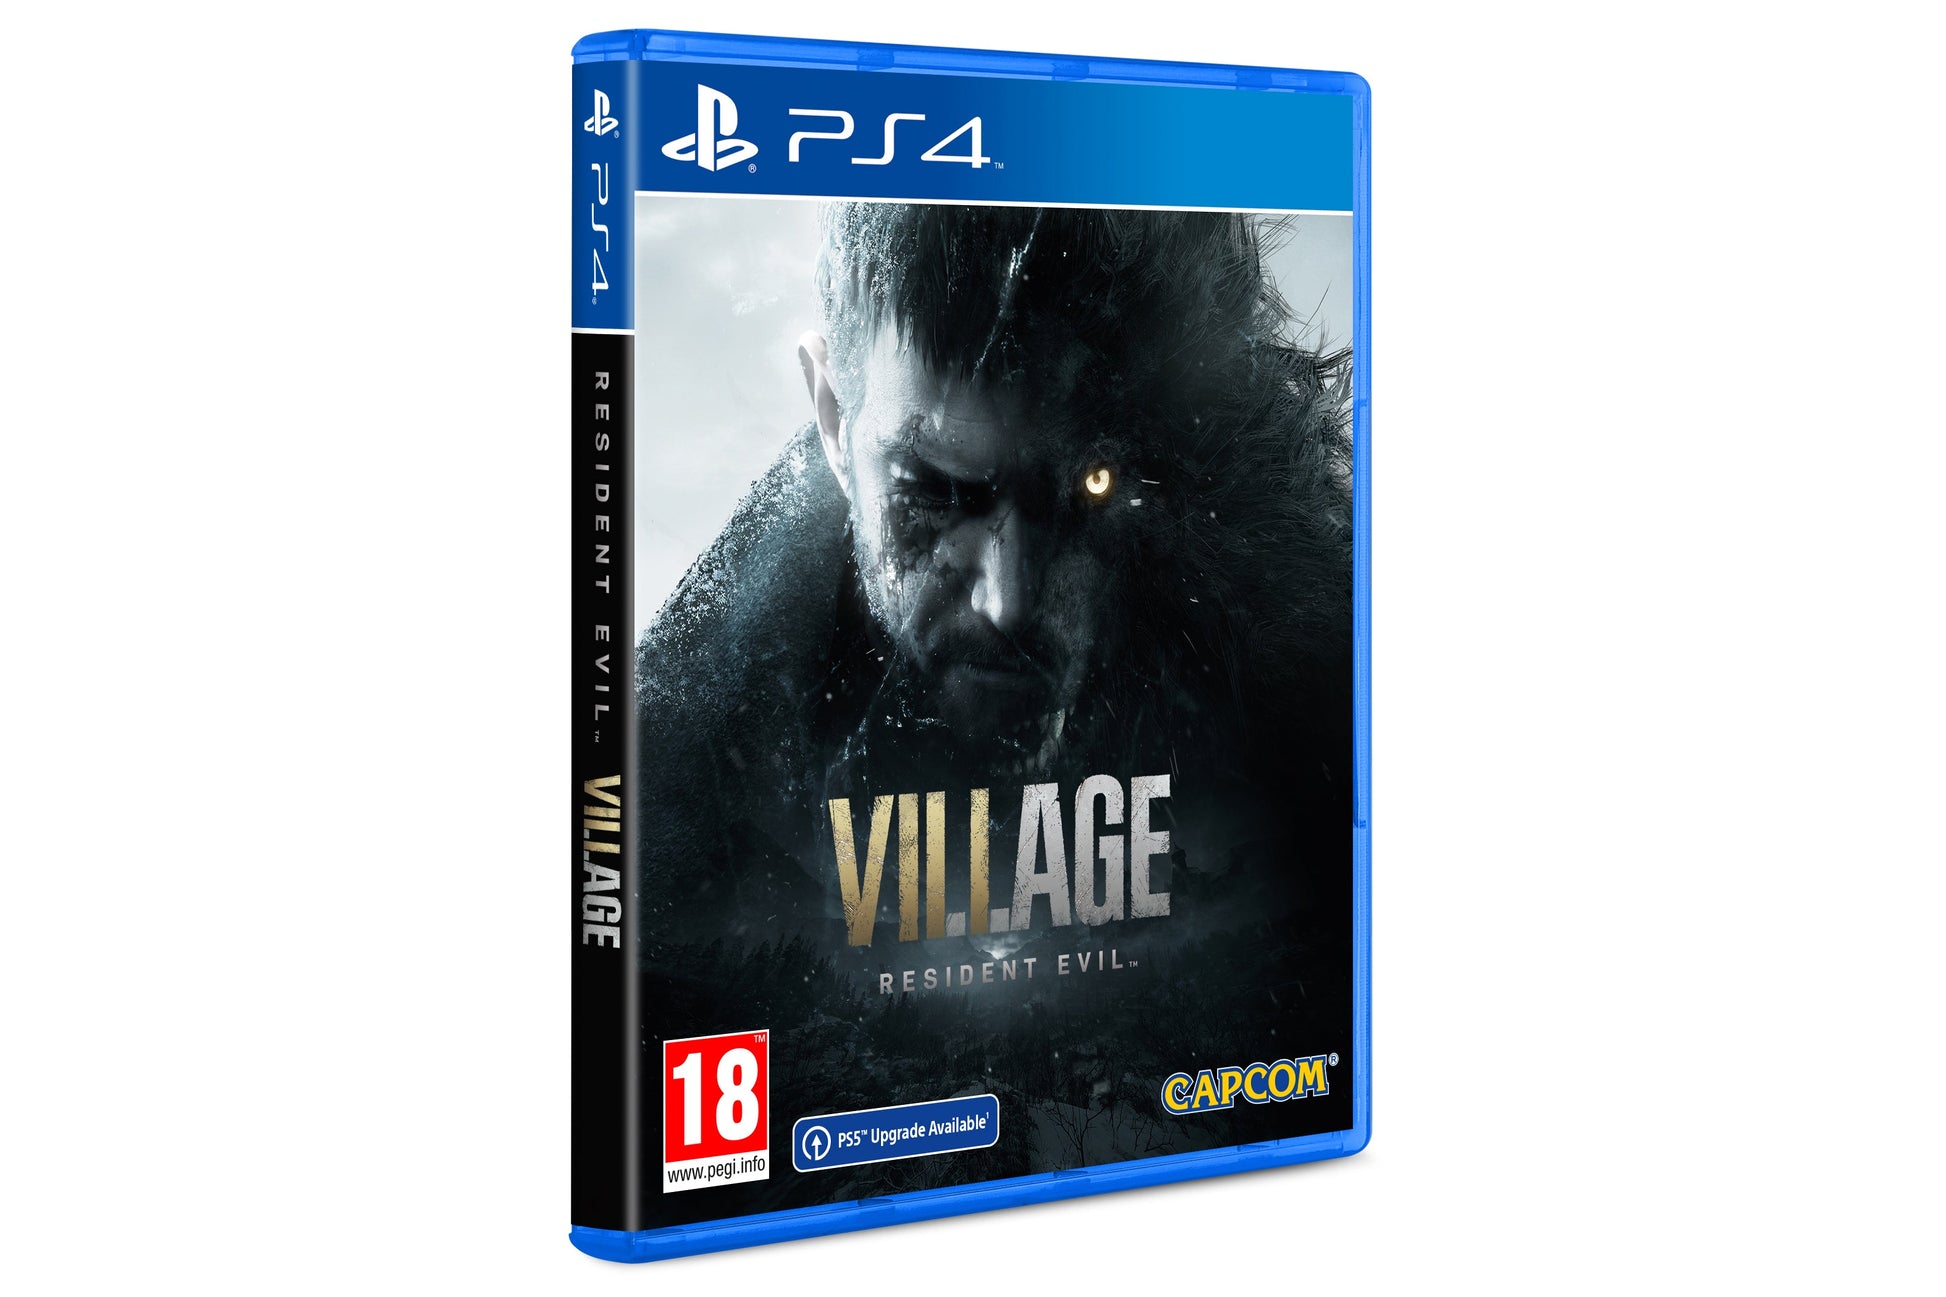 Sony PlayStation 4 Resident Evil Village Game - maplin.co.uk